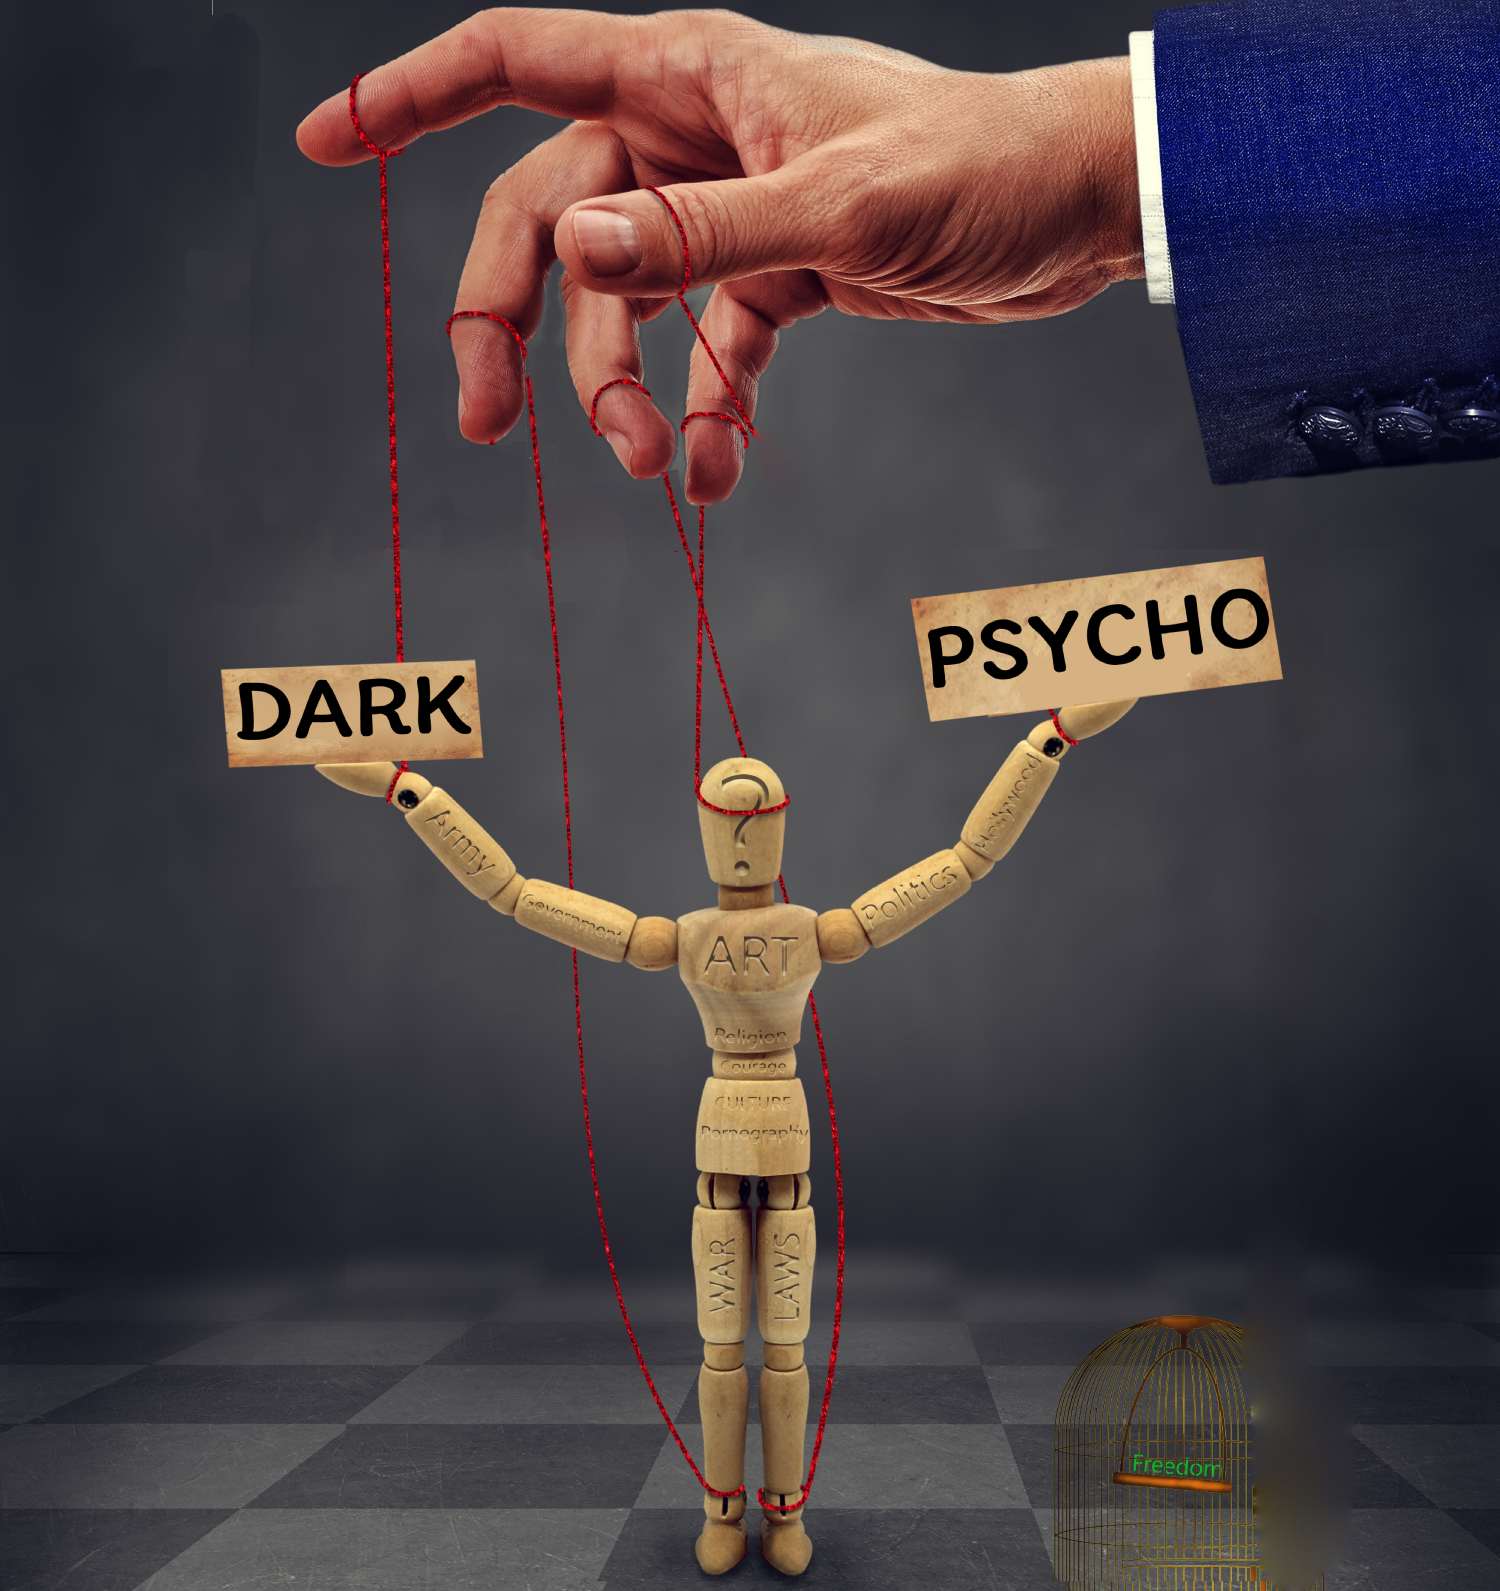 muppetter holding dark psychology cards